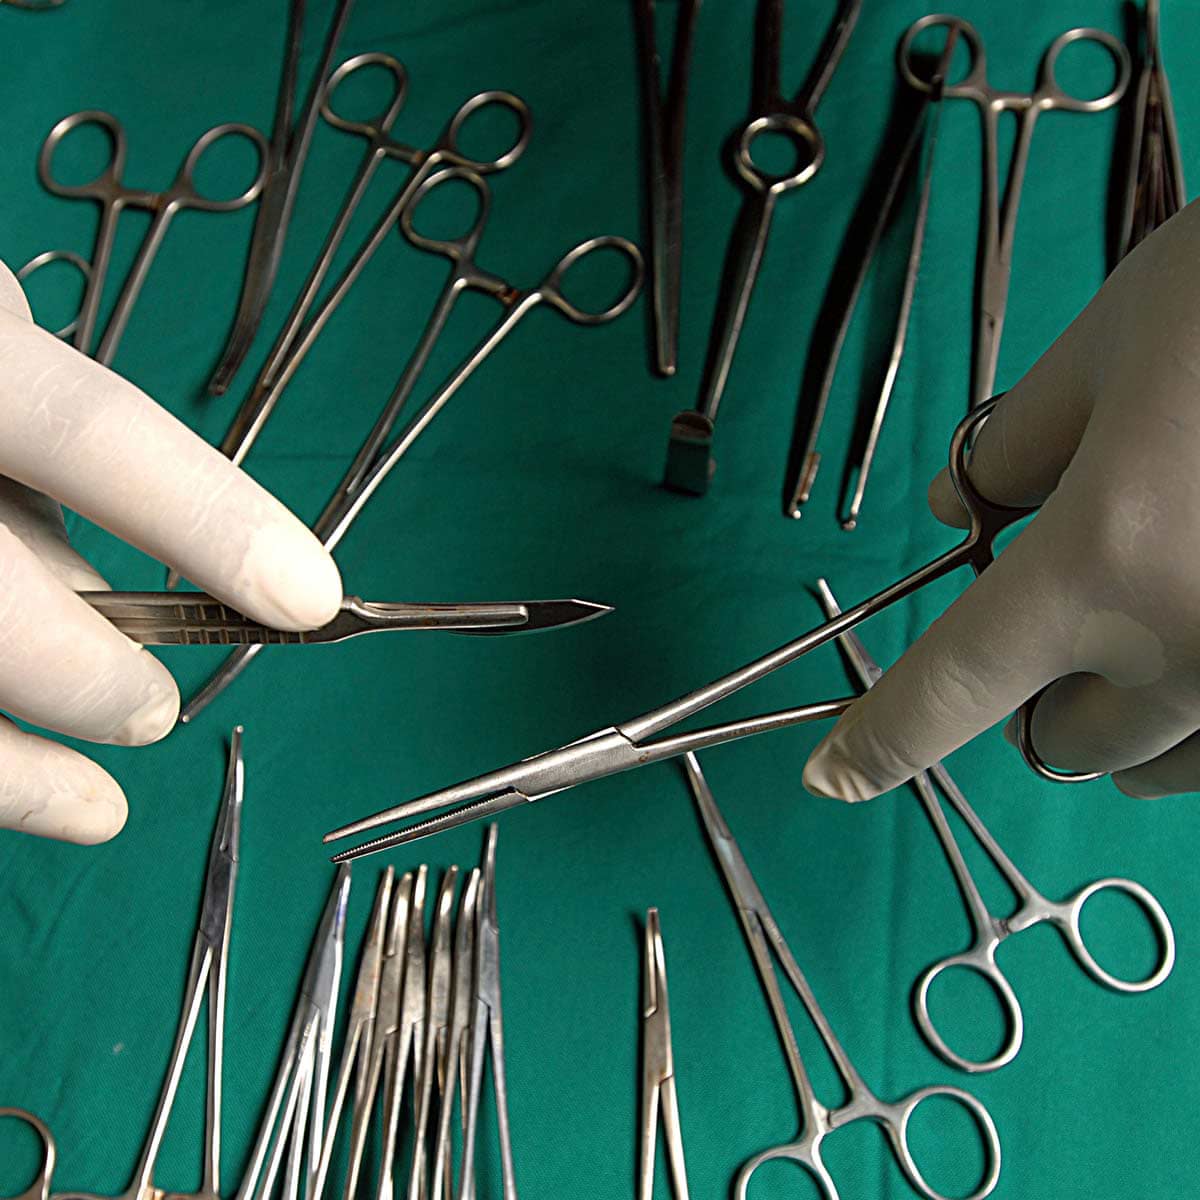 Plastic Surgery in Iran